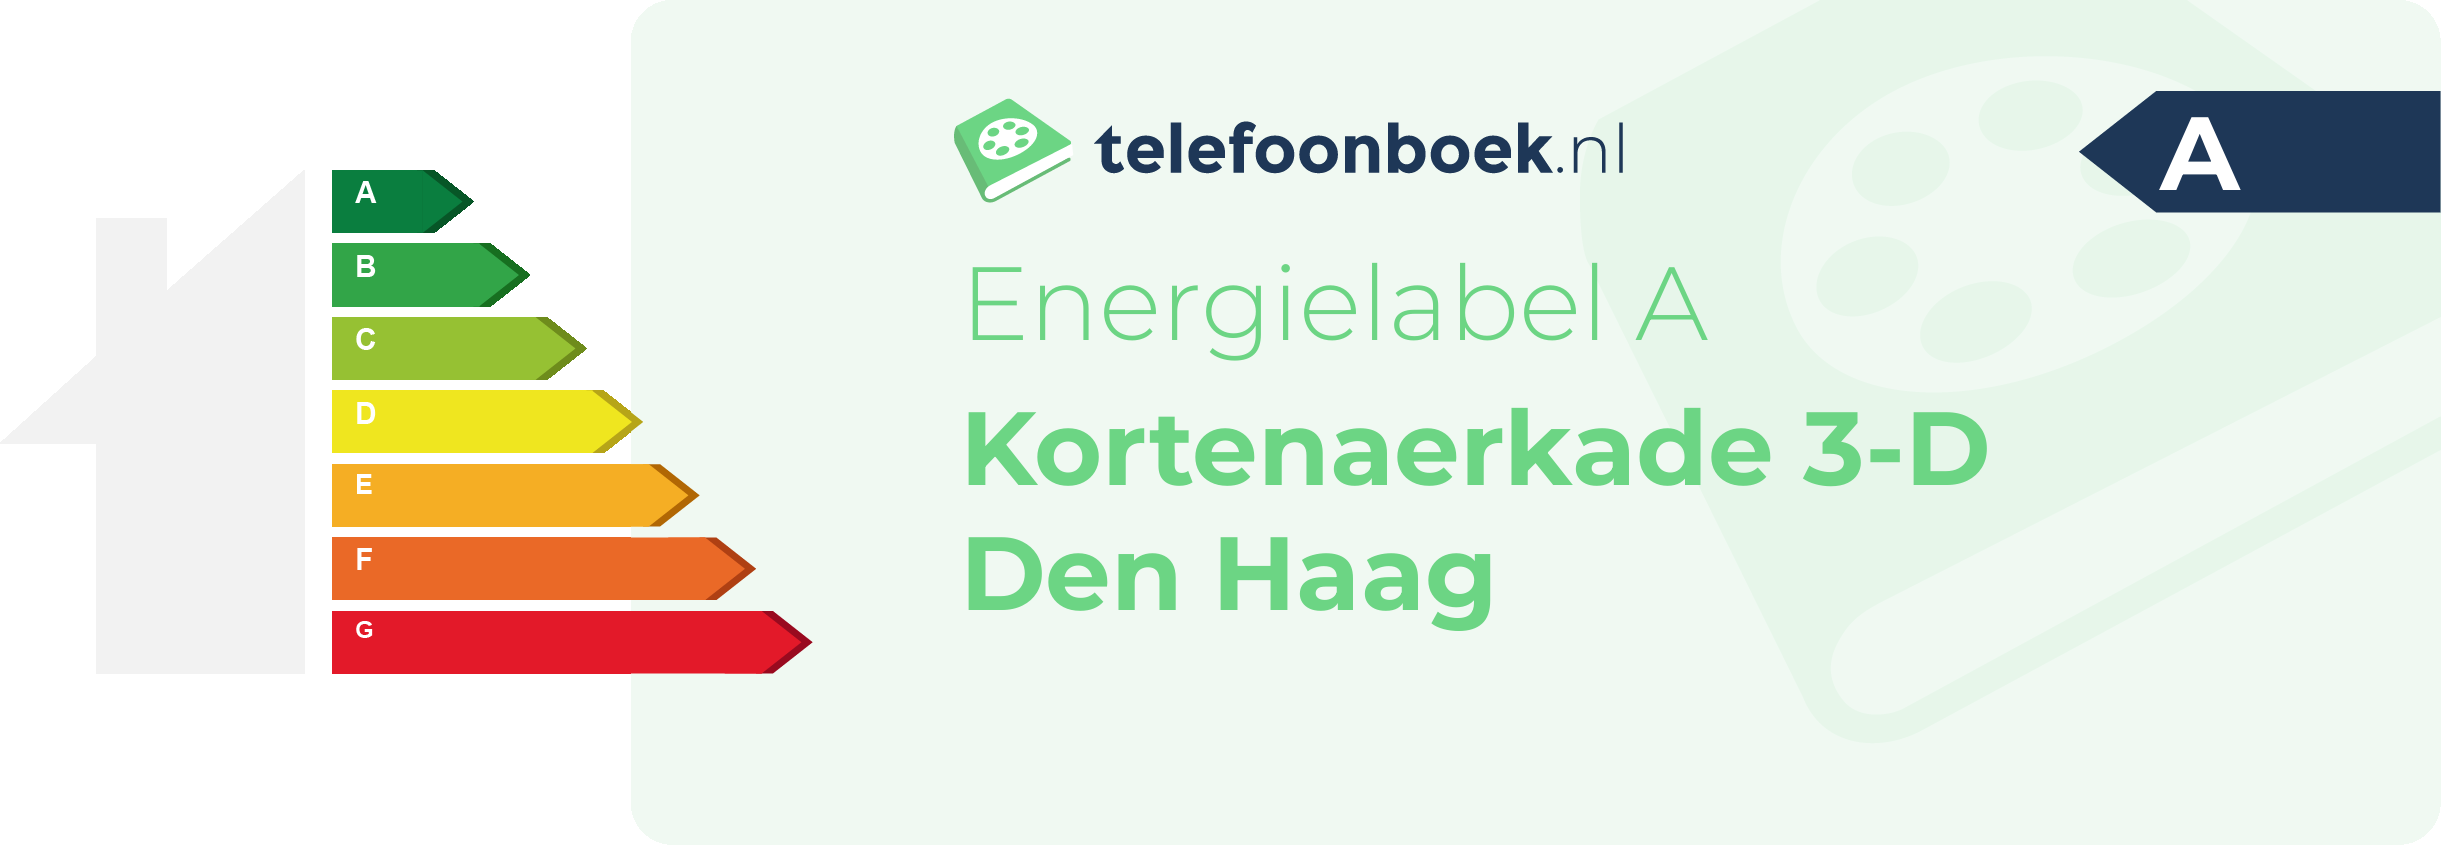 Energielabel Kortenaerkade 3-D Den Haag